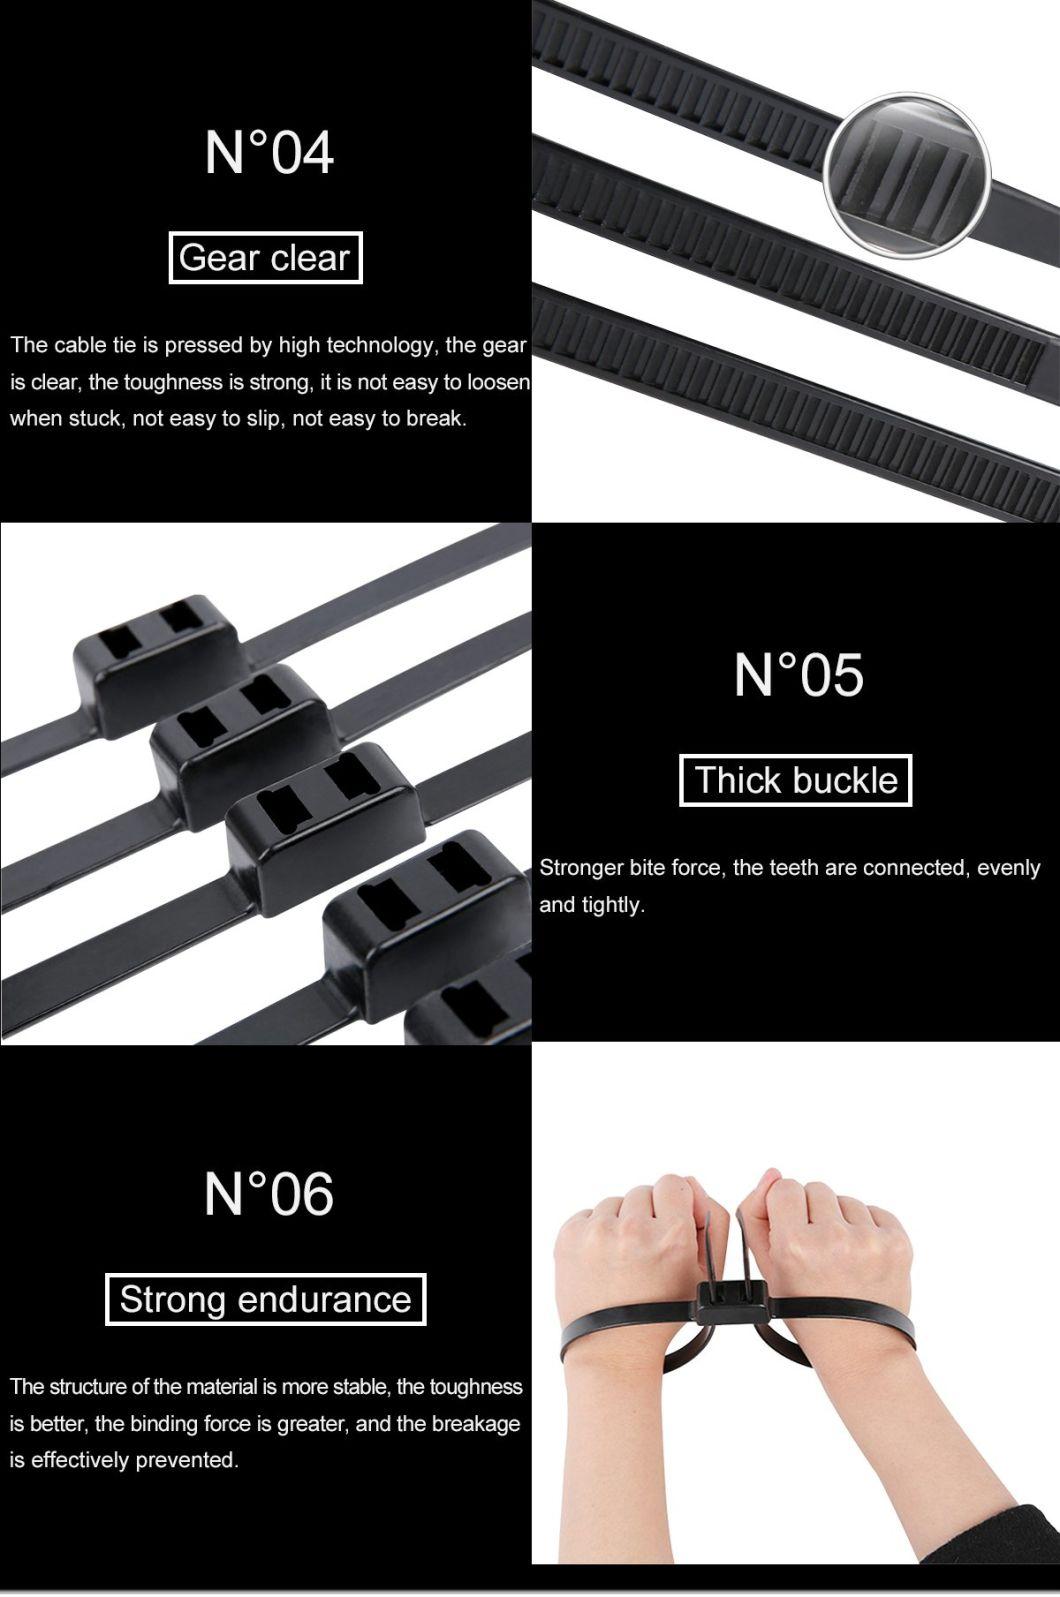 13*880 Black Nylon Heavy Duty Plastic Handcuff Cable Ties